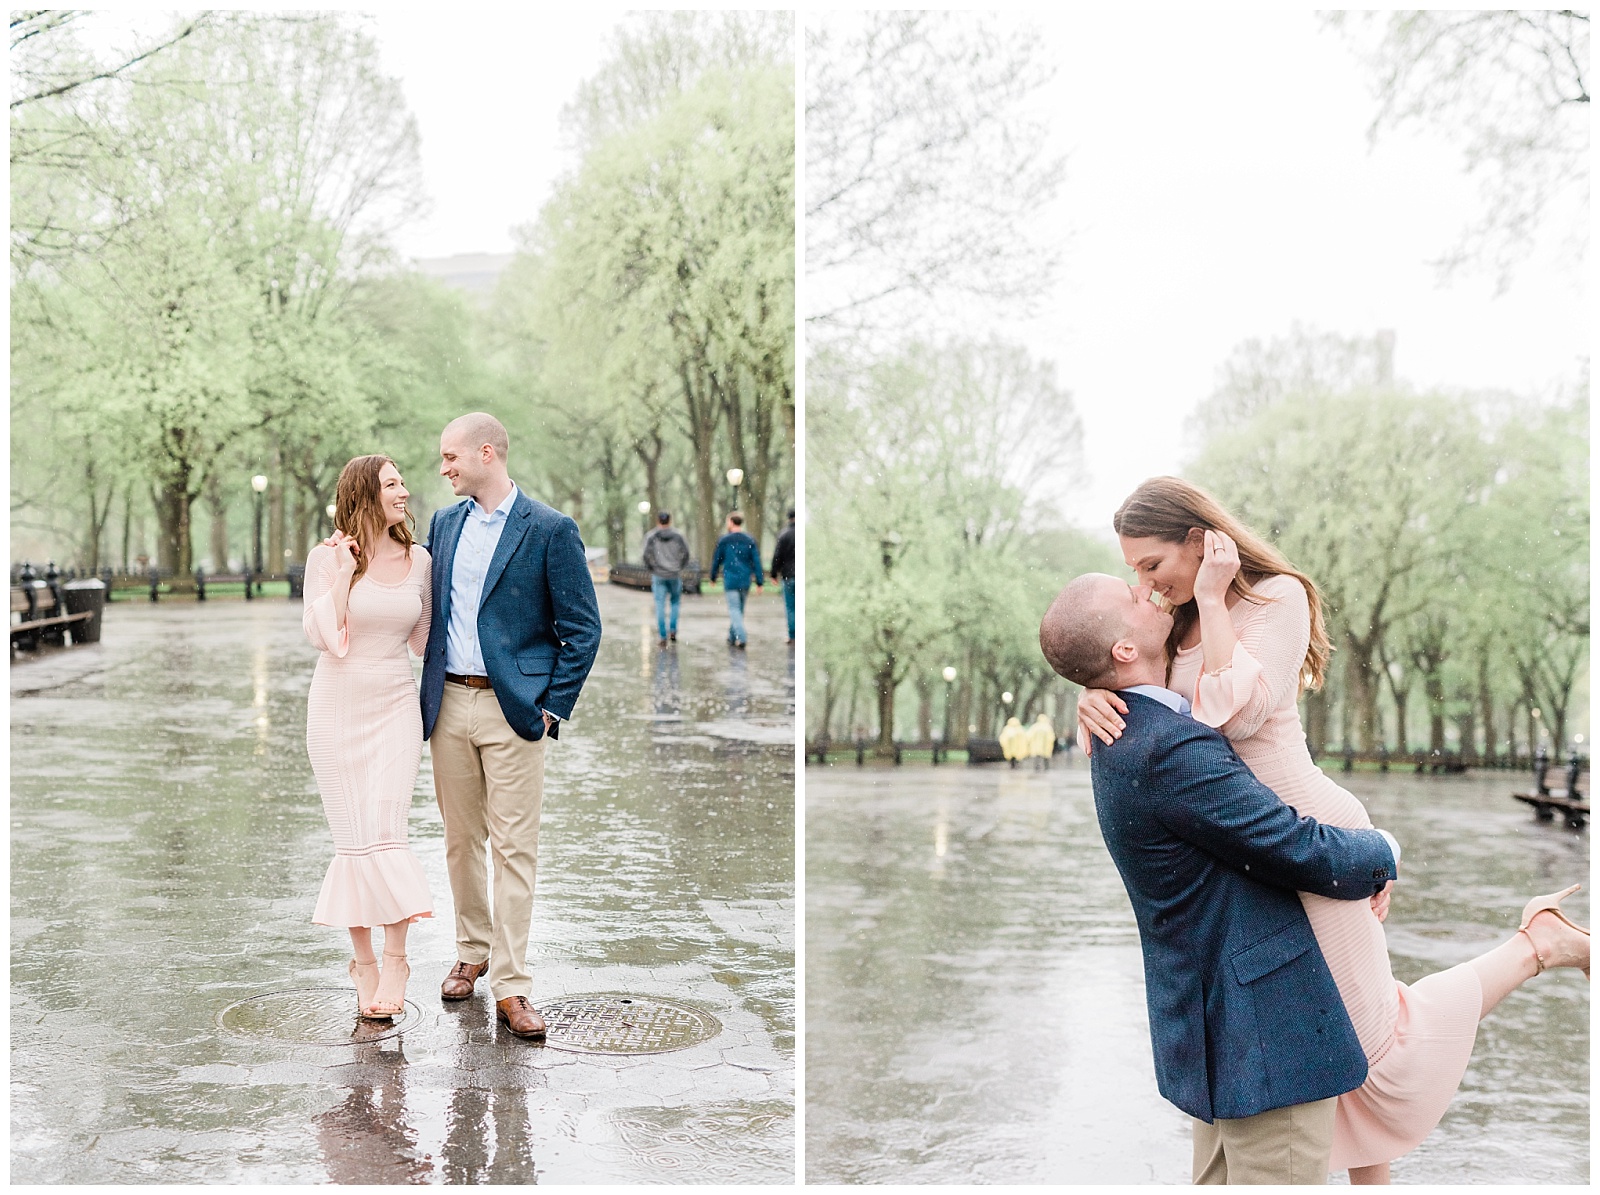 A couple walks through the Central Park Mall in the rain.